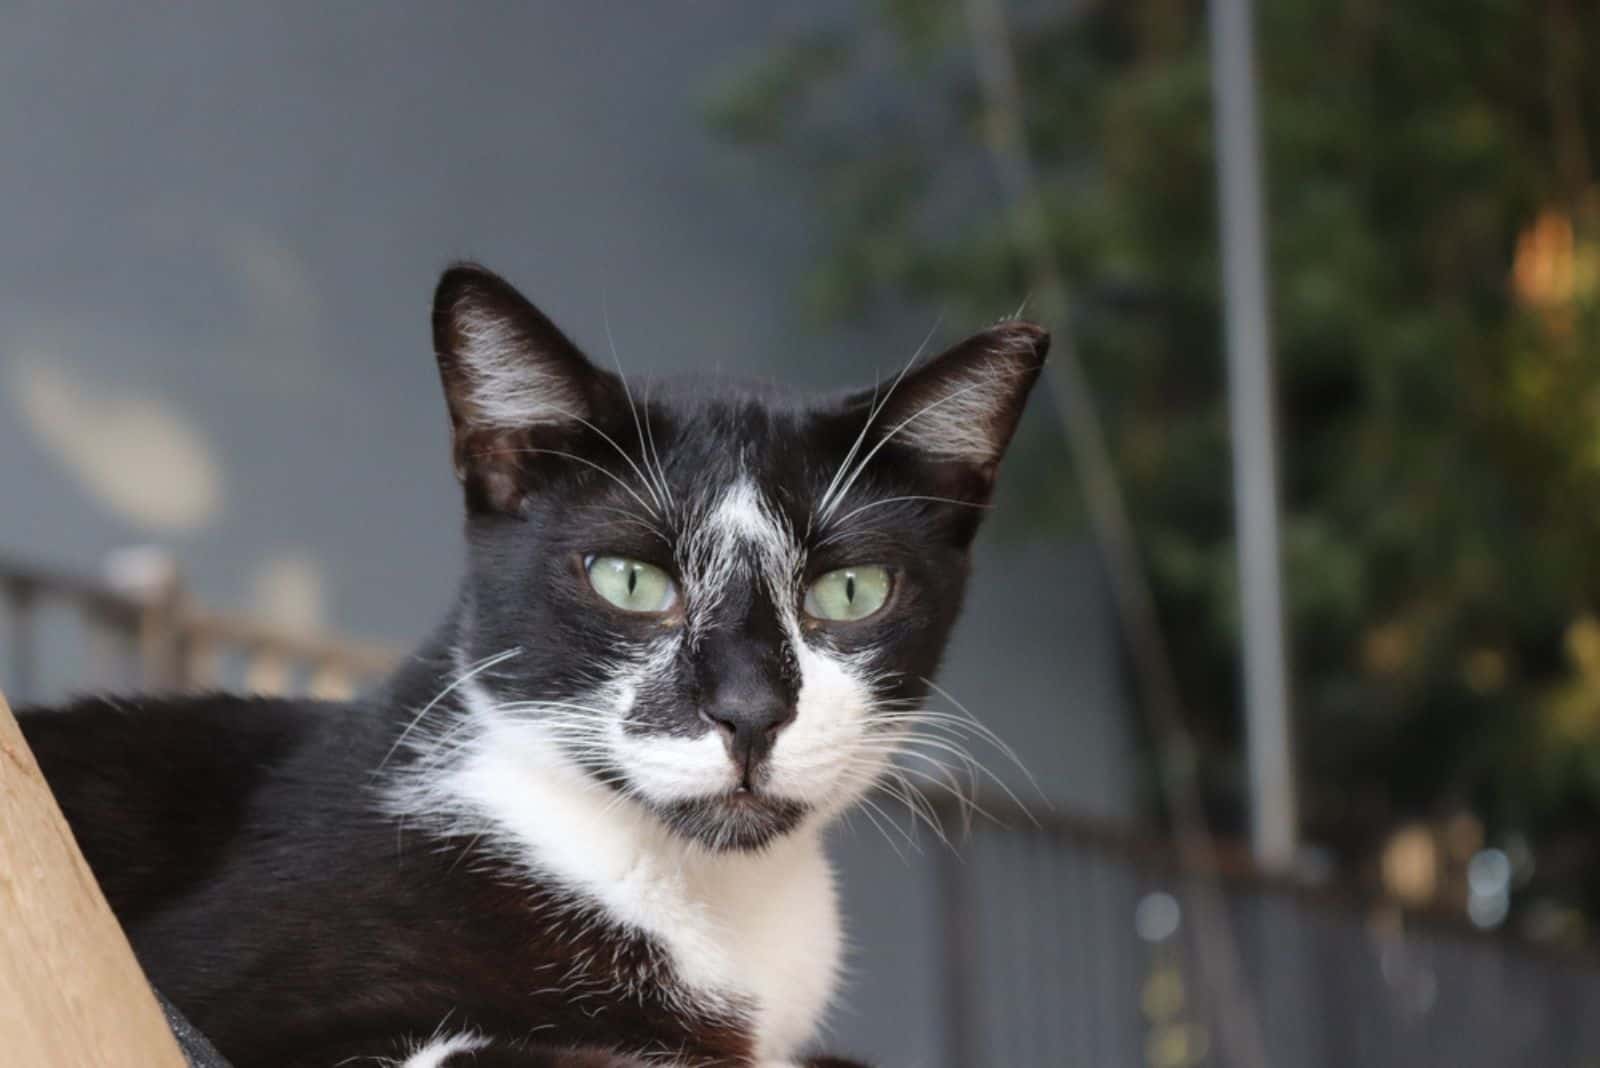 black and white tuxedo cat, looking toward the camera